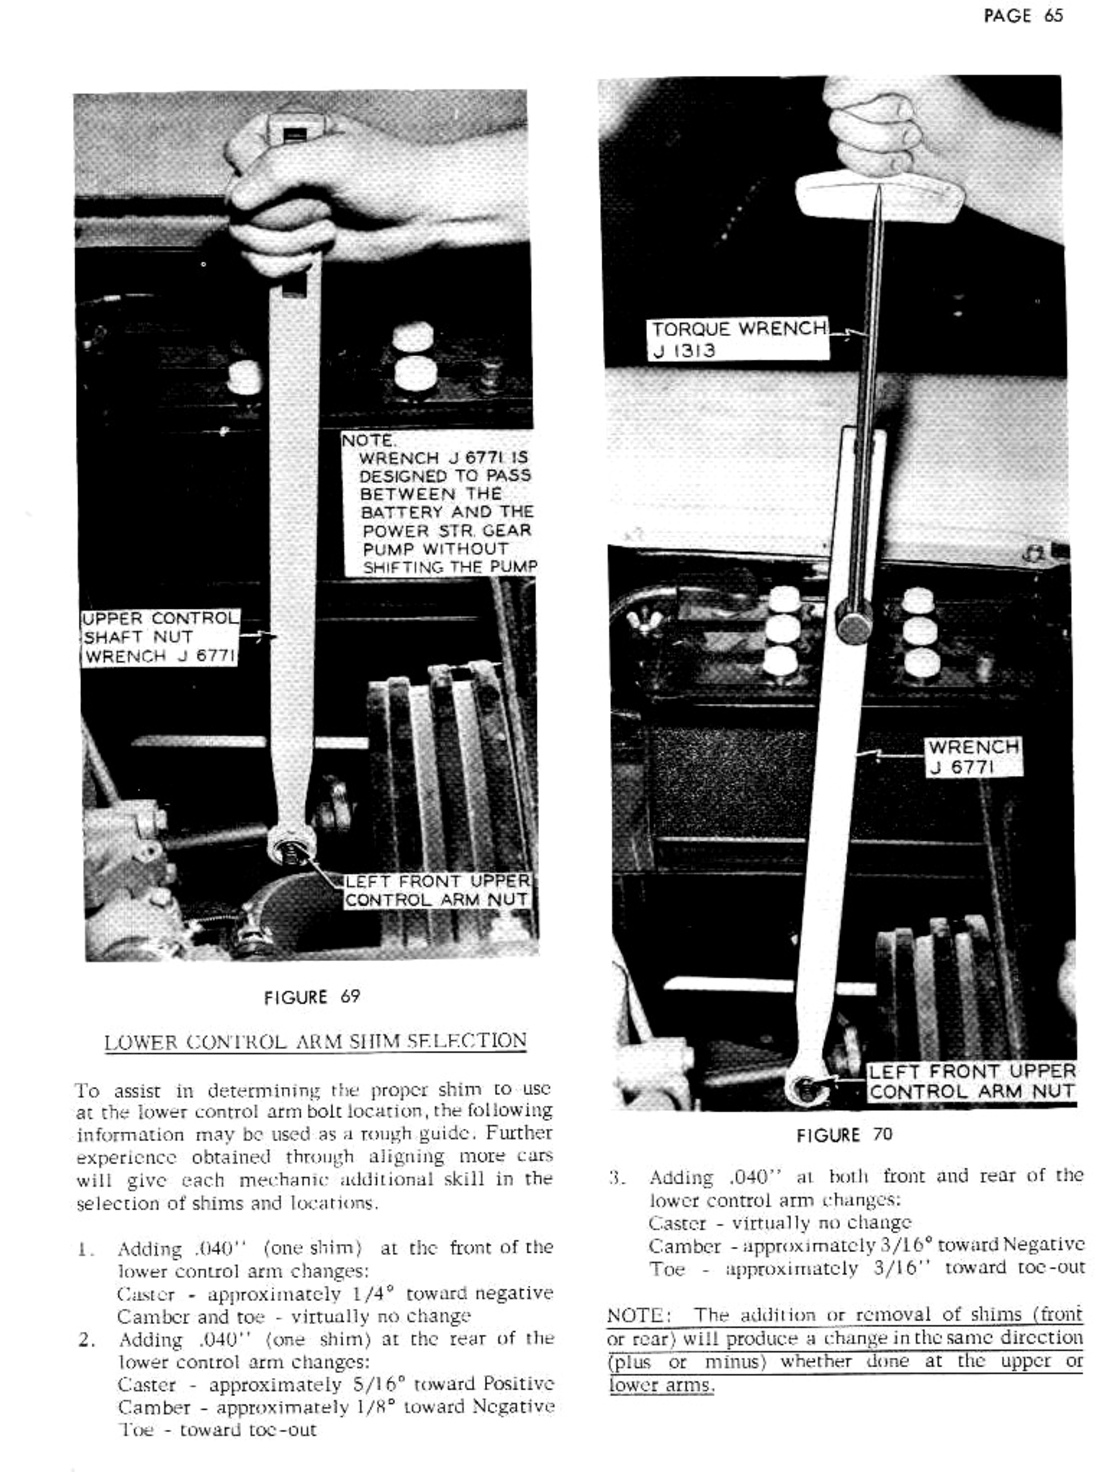 n_1957 Buick Product Service  Bulletins-070-070.jpg